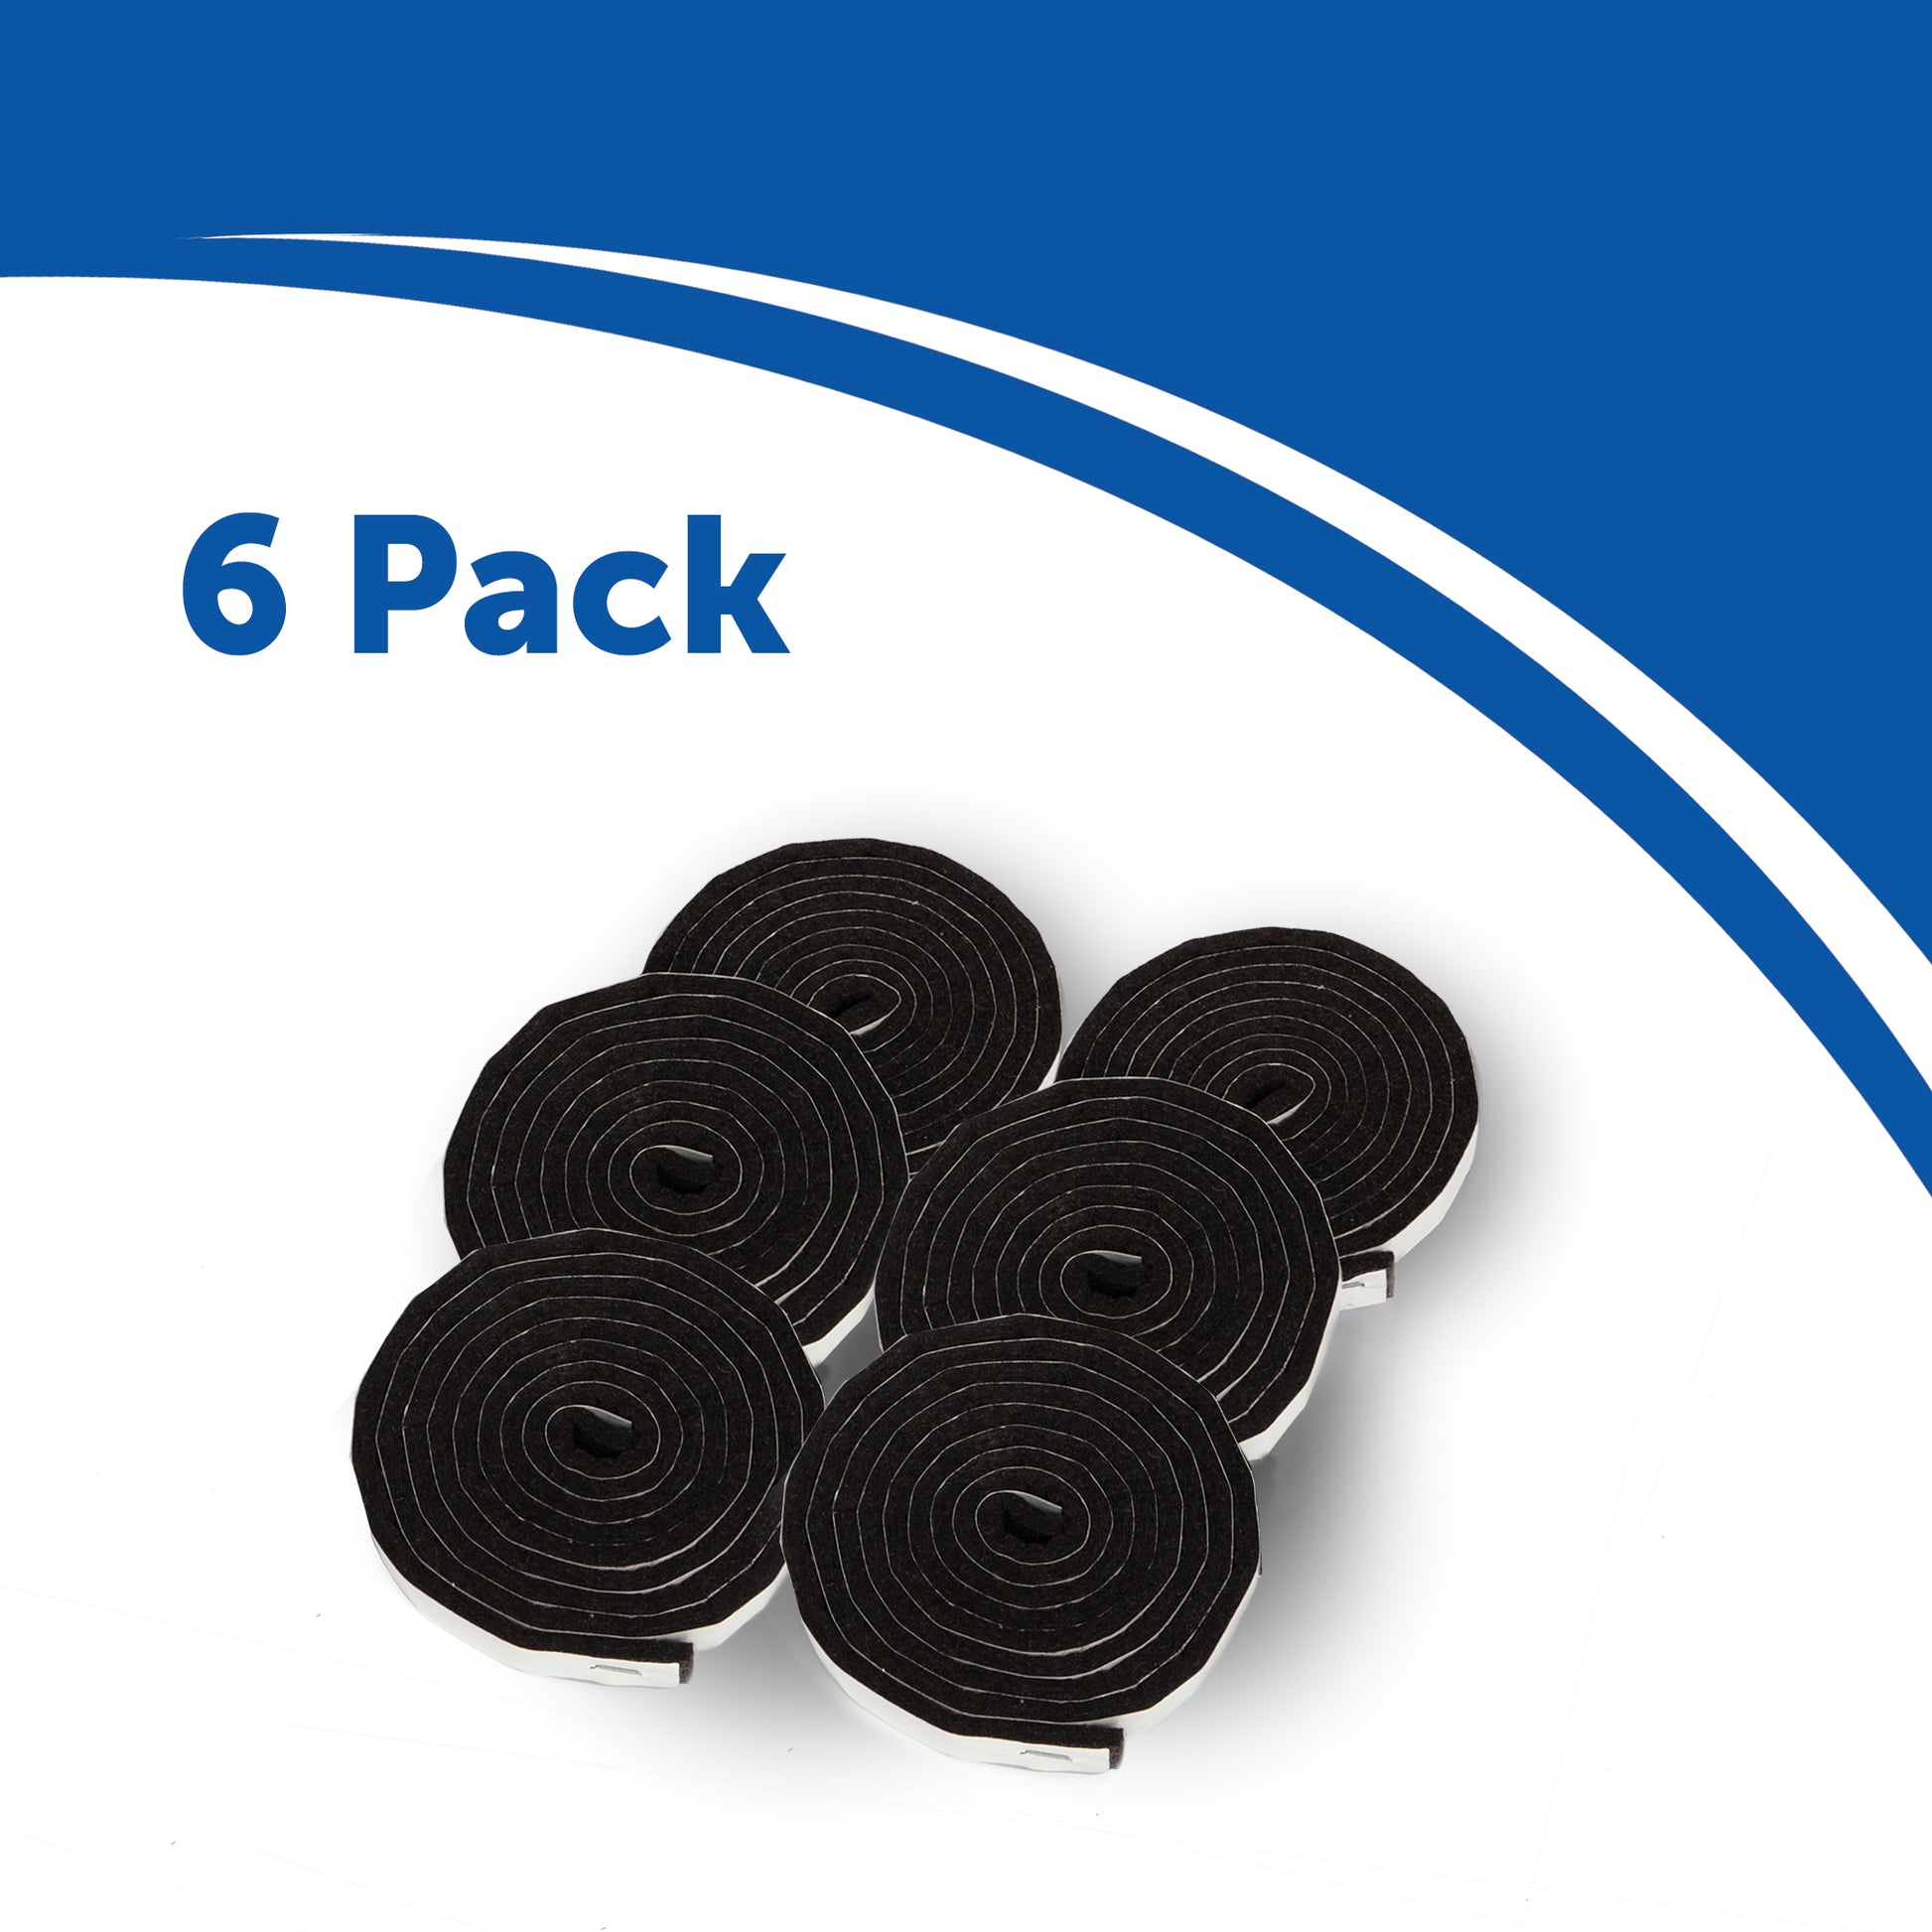 6 Pack SIMALA floor protector pads